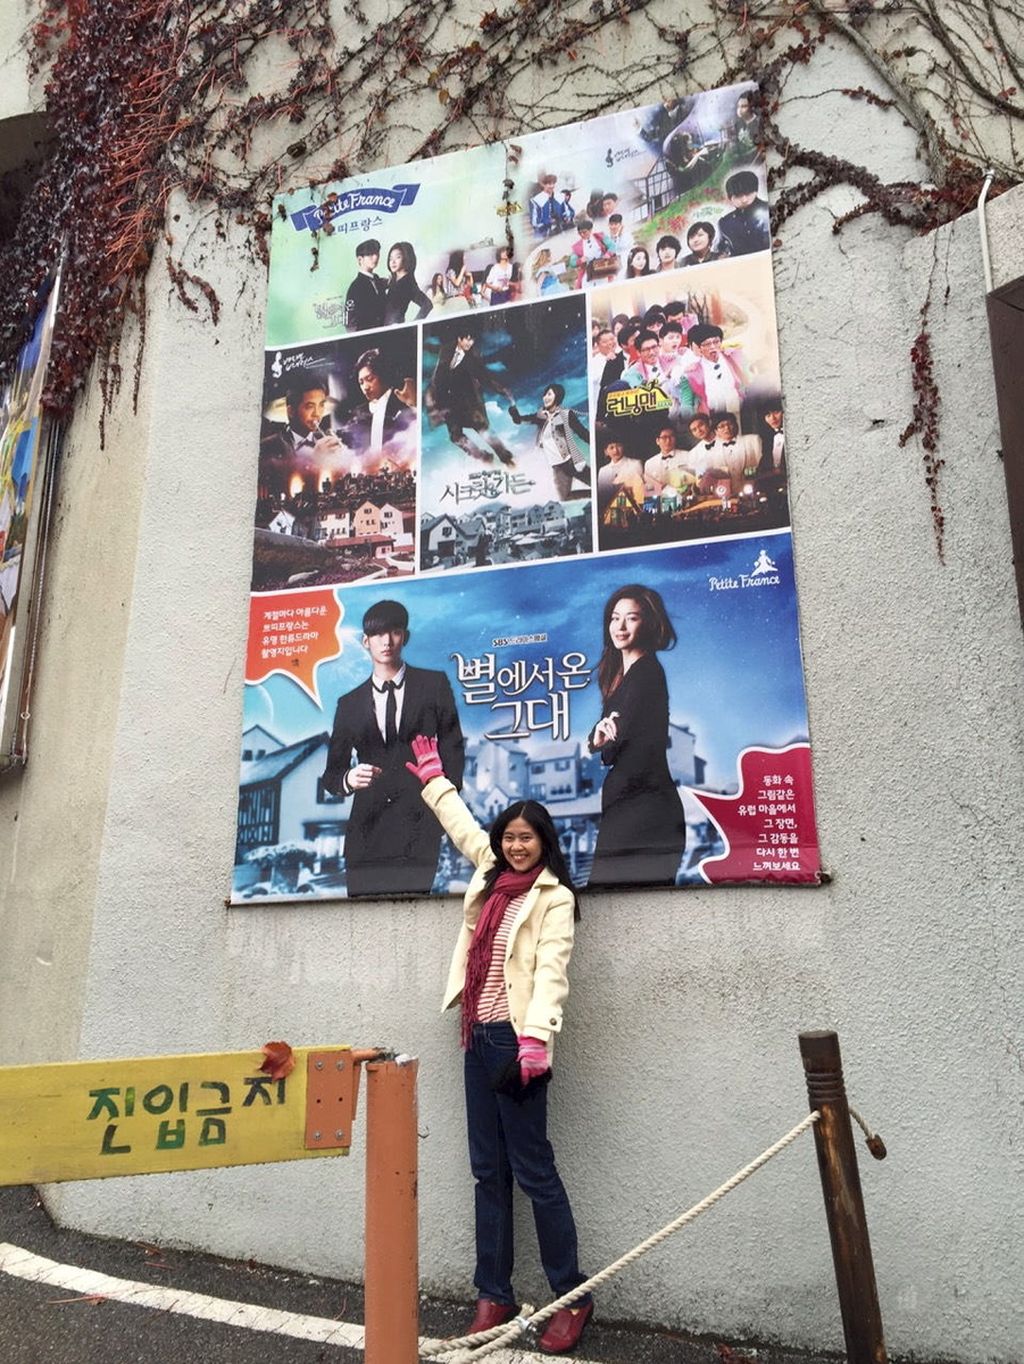 Pencinta drama korea, Erry Andriyati, mengunjungi Petite France dan berpose di depan poster Do Min Joon, nama tokoh dalam drama <i>My Love from The Star</i>.